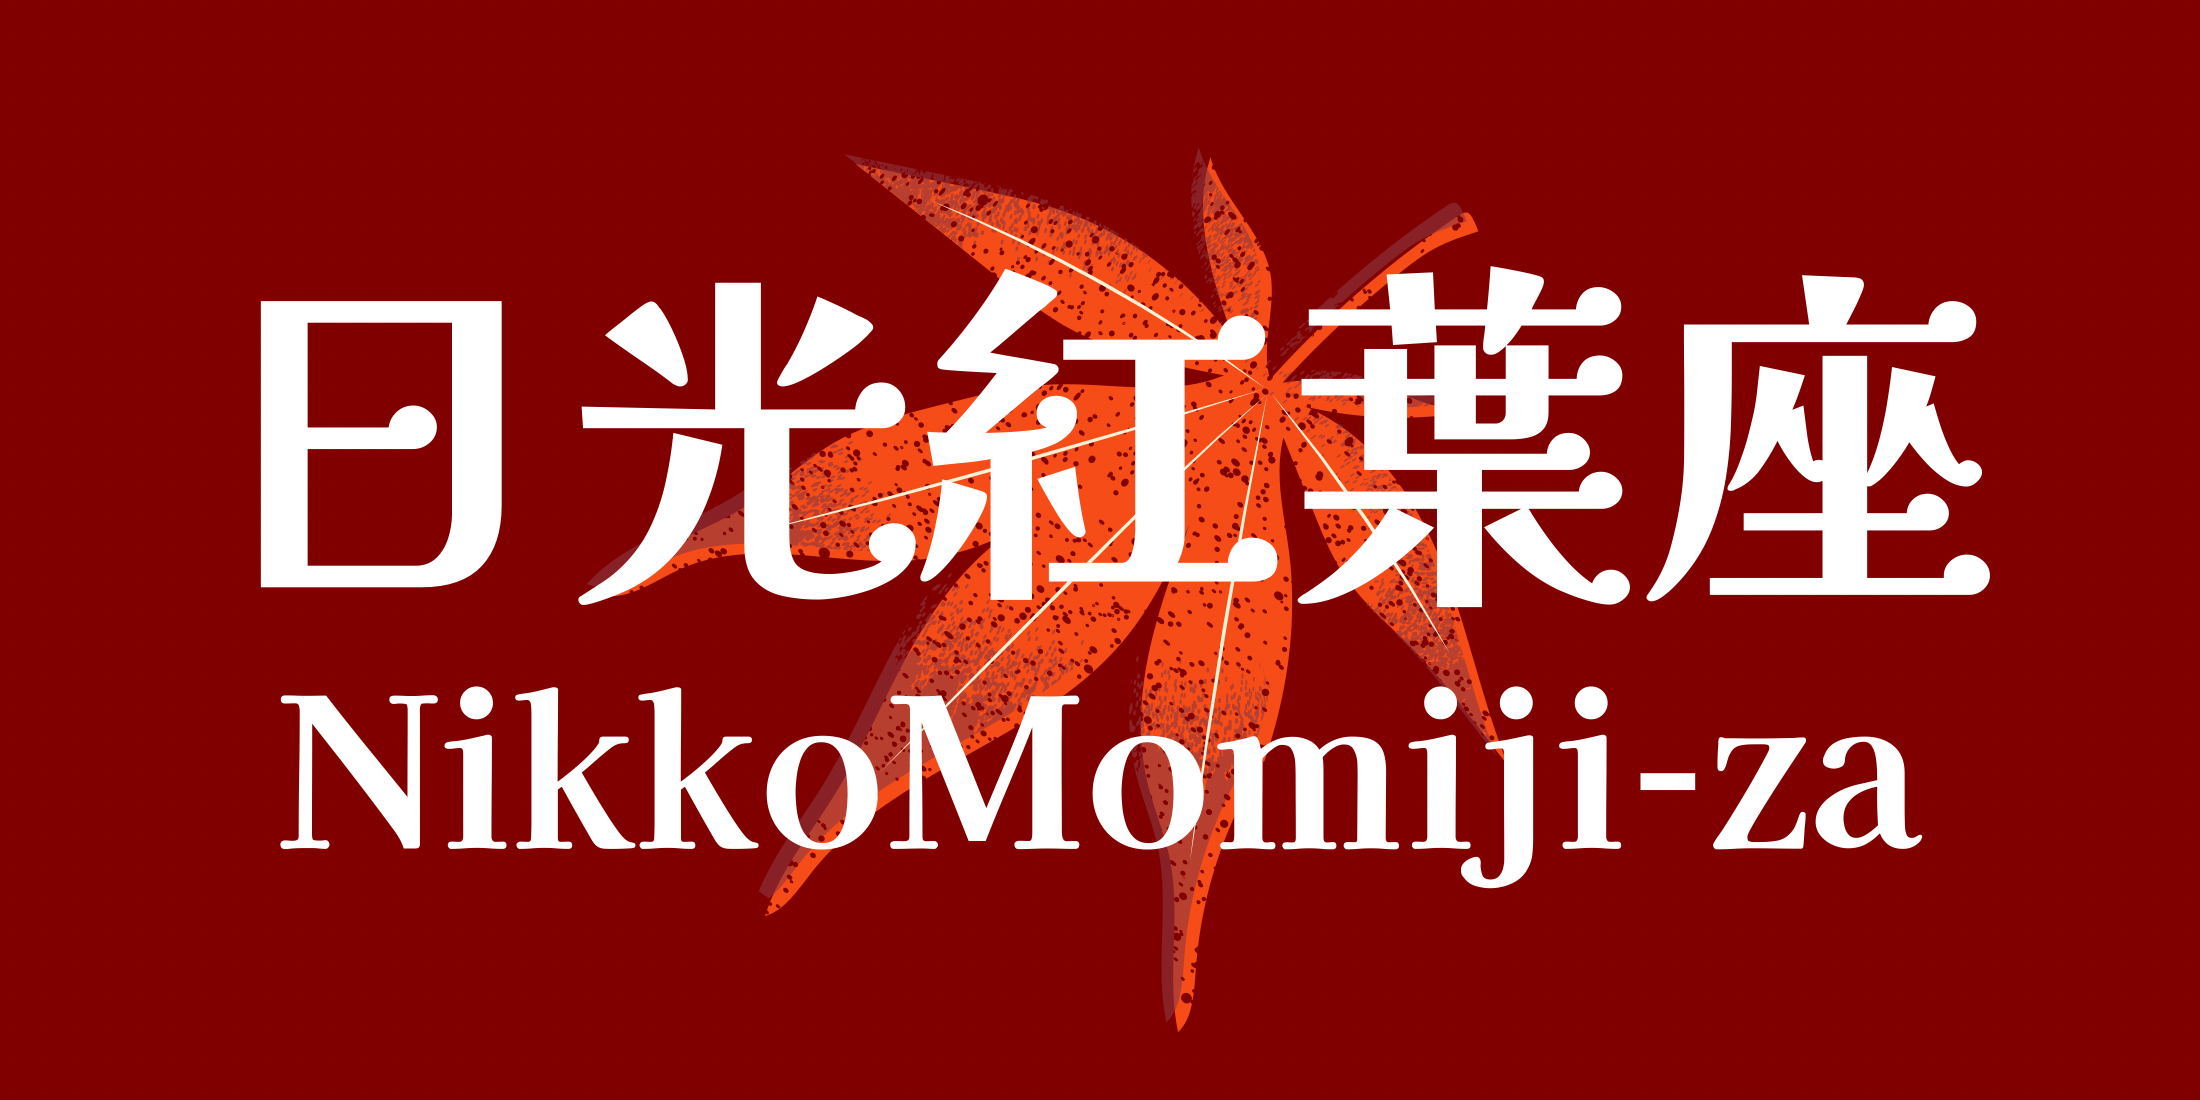 日光紅葉座(Nikko Momiji-za)